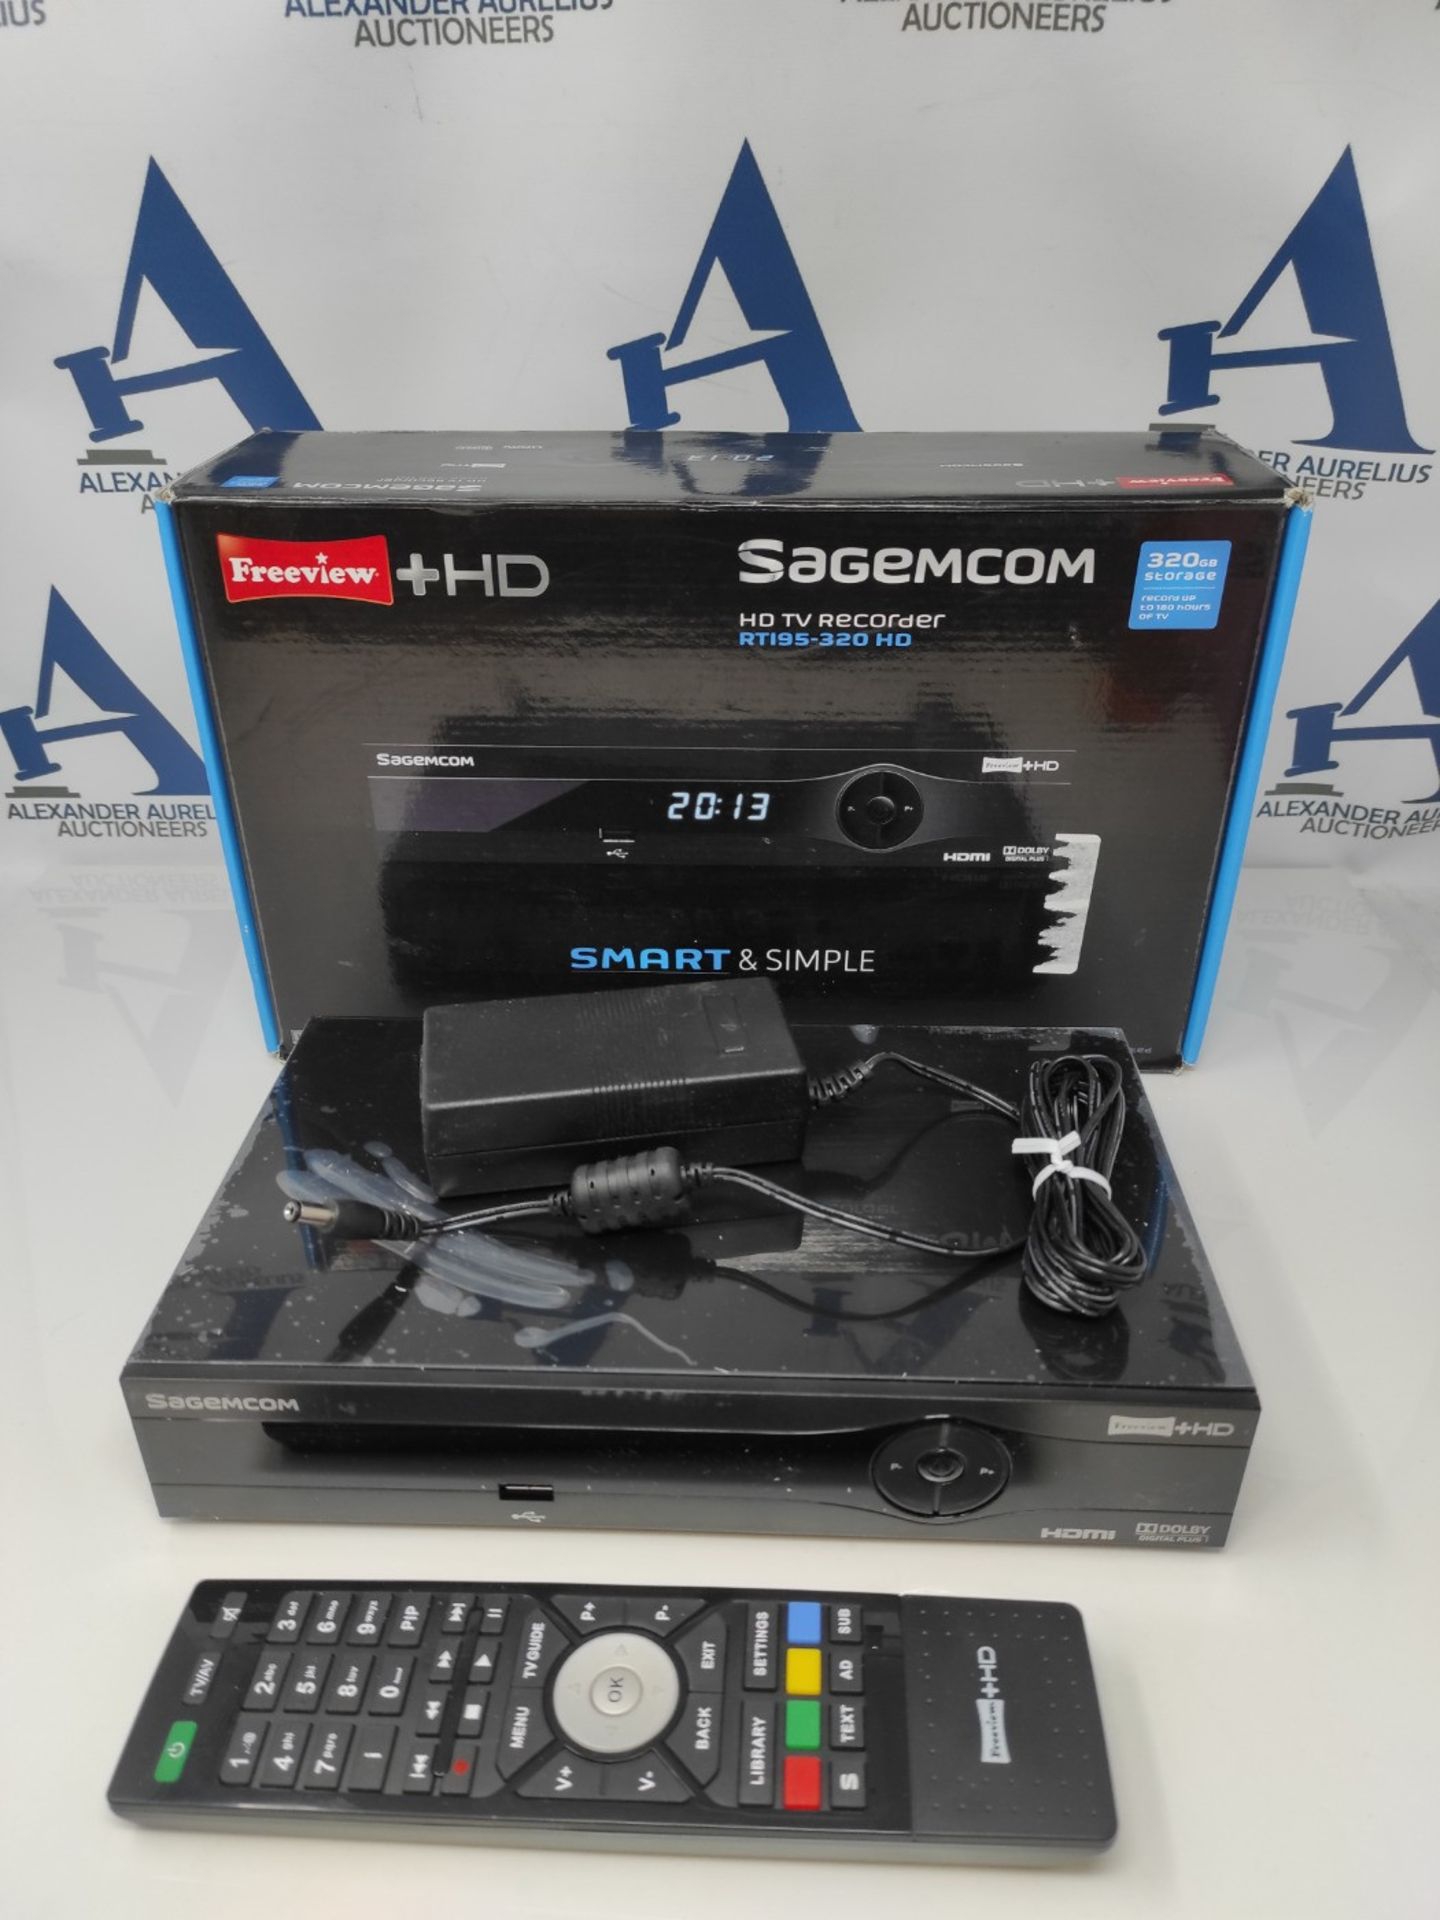 RRP £158.00 Sagemcom RTI95320 Freeview + HD Digital TV Recorder 320GB - Image 2 of 2